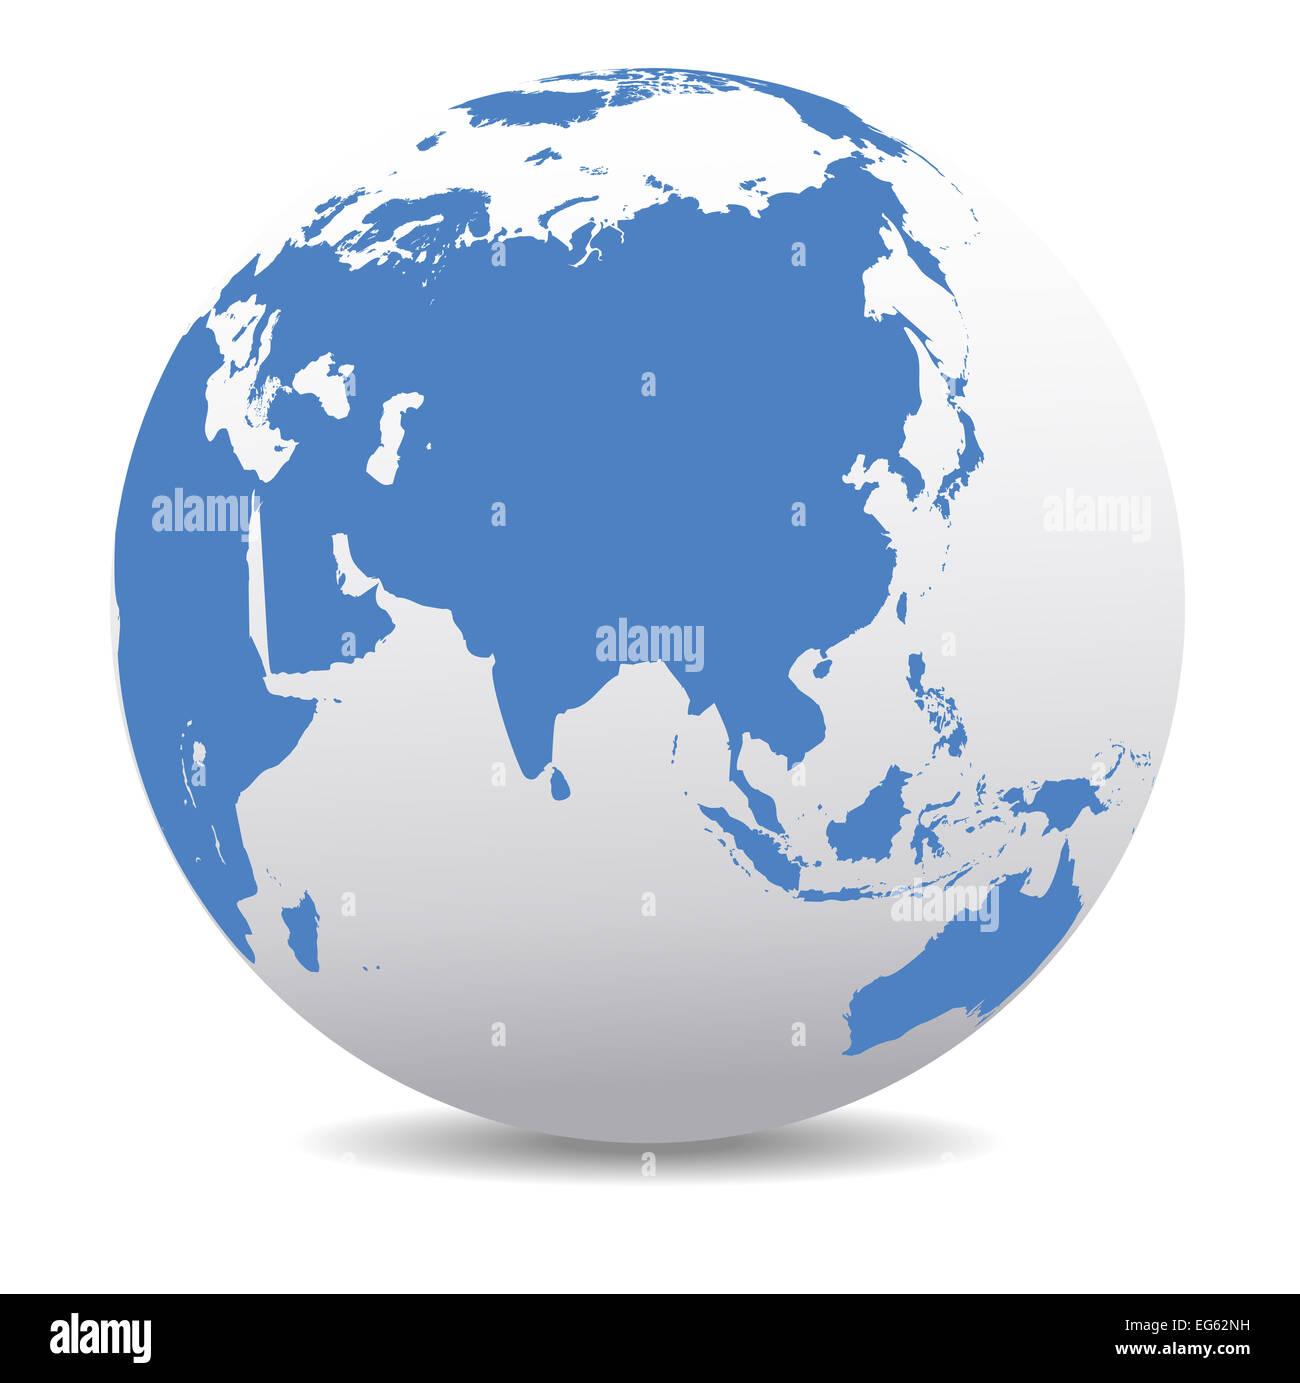 Cina, Giappone, Malaysia, Tailandia, Vietnam, Indonesia, mondo globale messa a terra Foto Stock